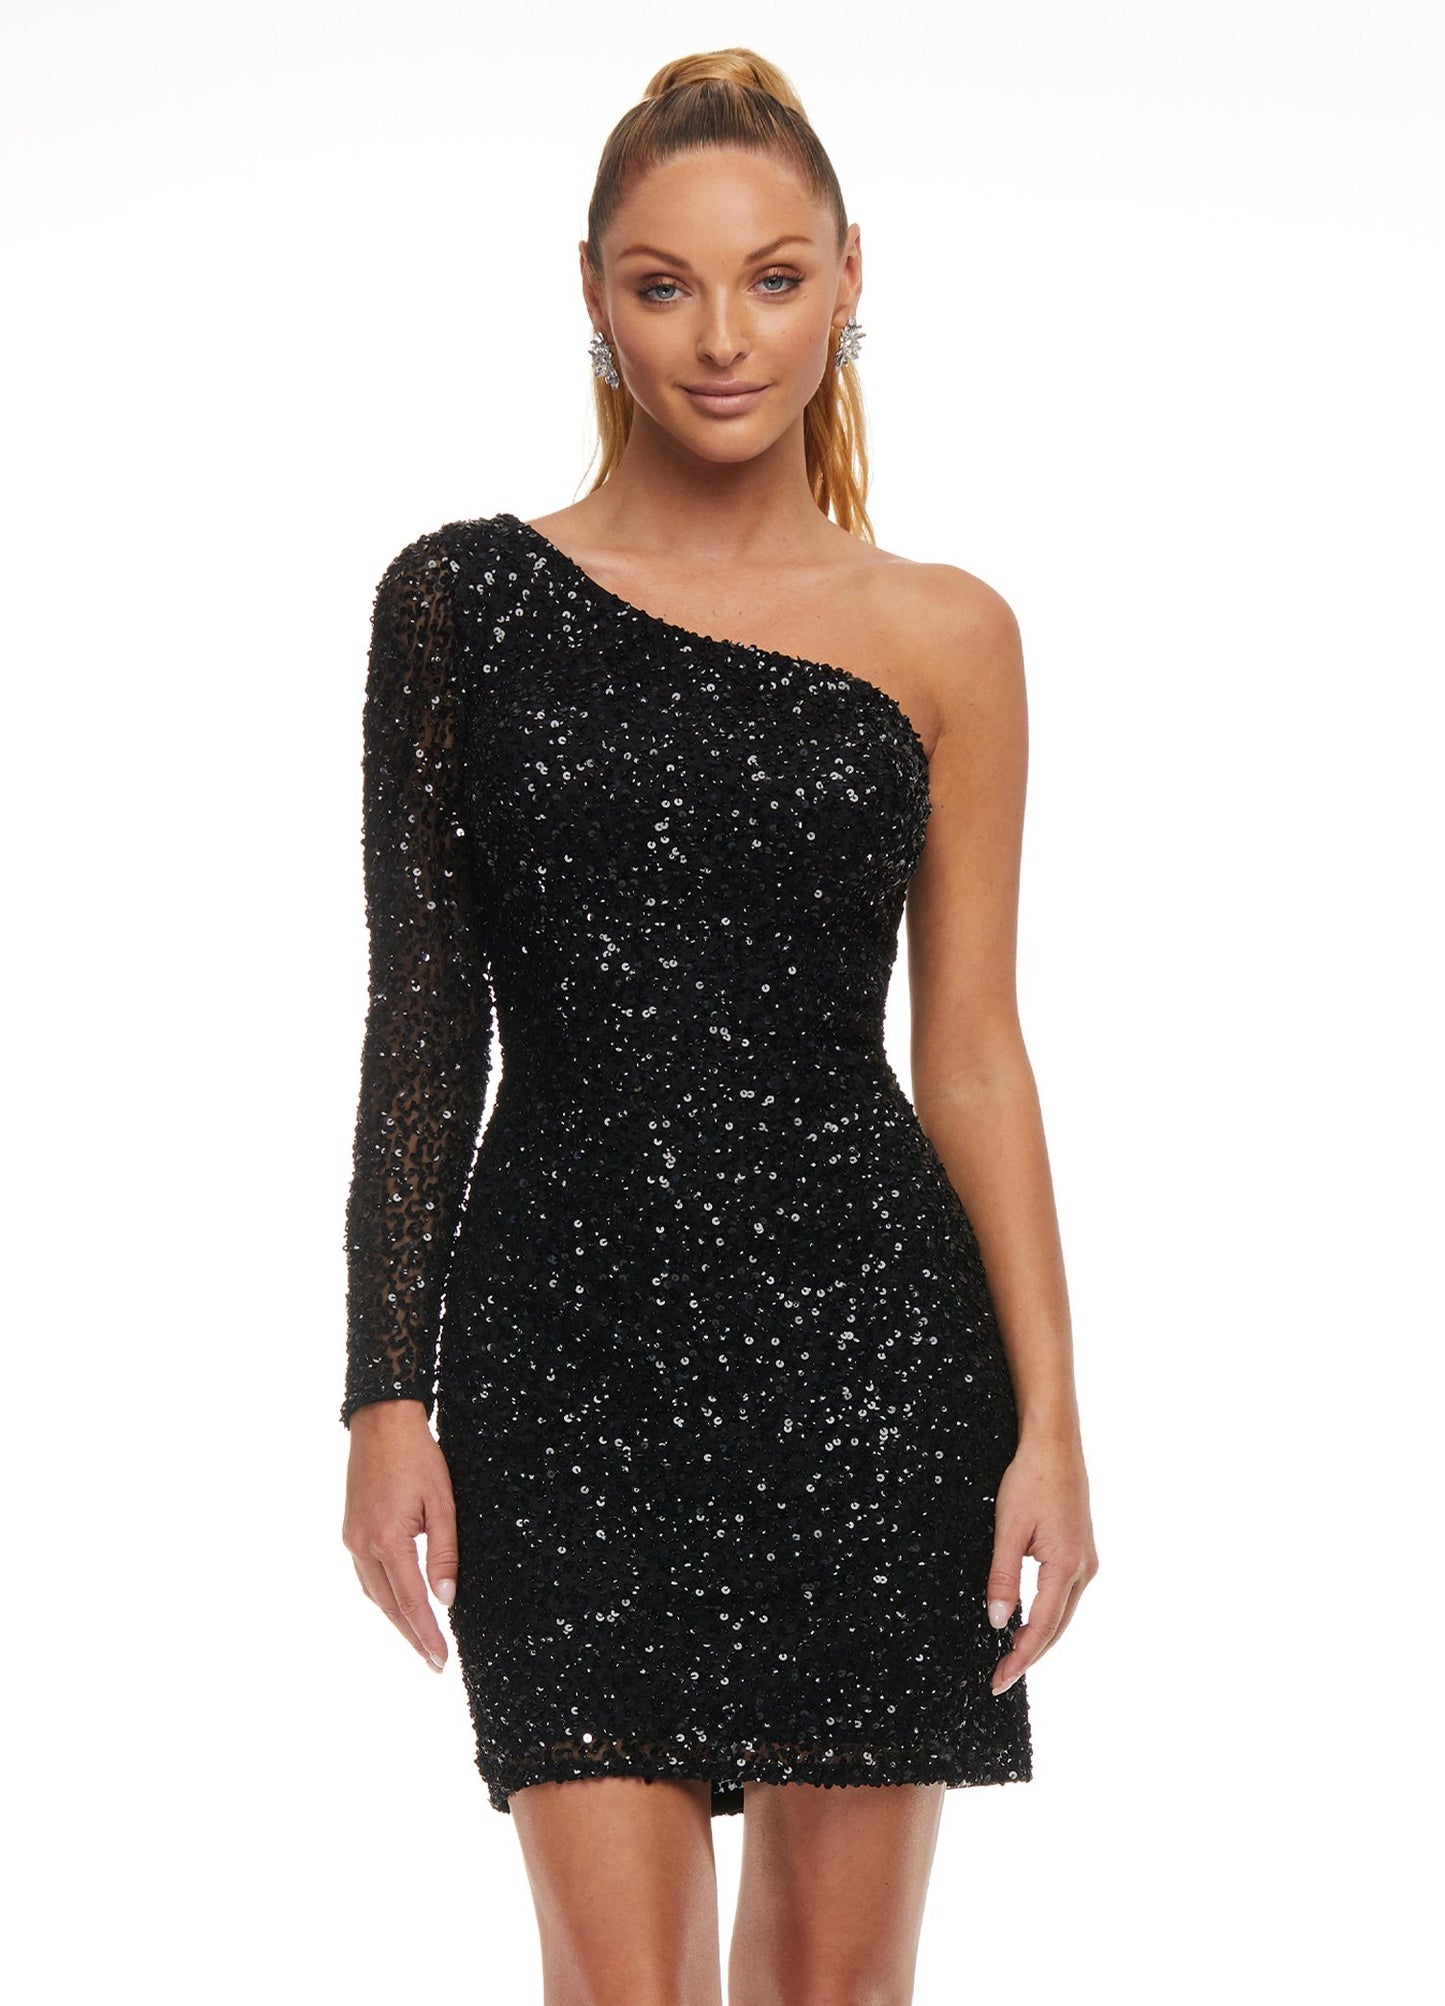 Ashley-Lauren-4457-black-cocktail-dress-front-one-shoulder-long-sleeve-fitted-sequin